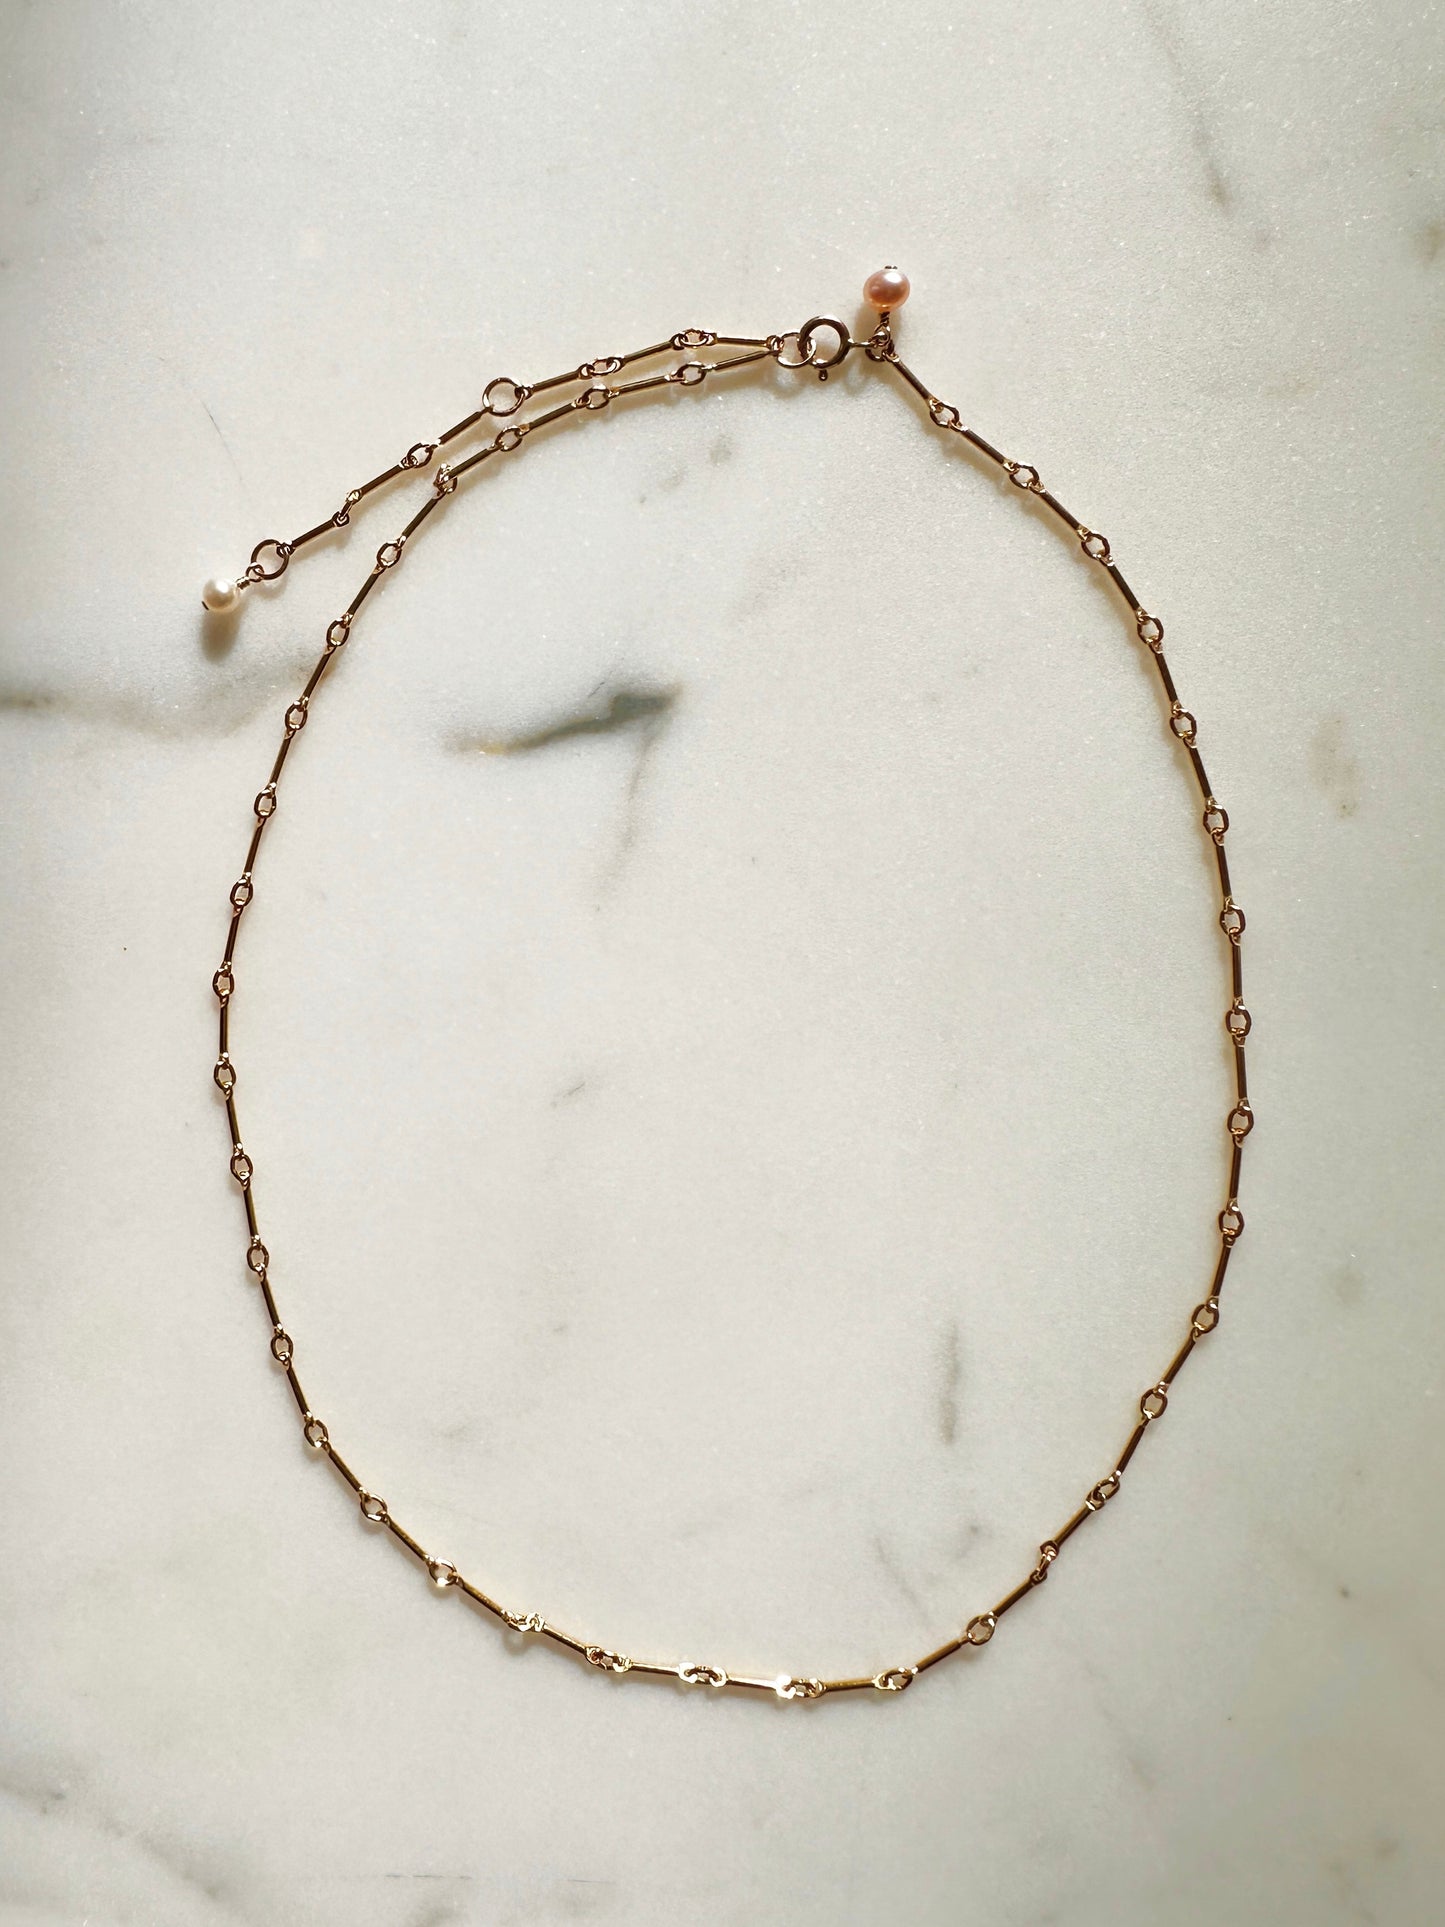 The Celine Necklace